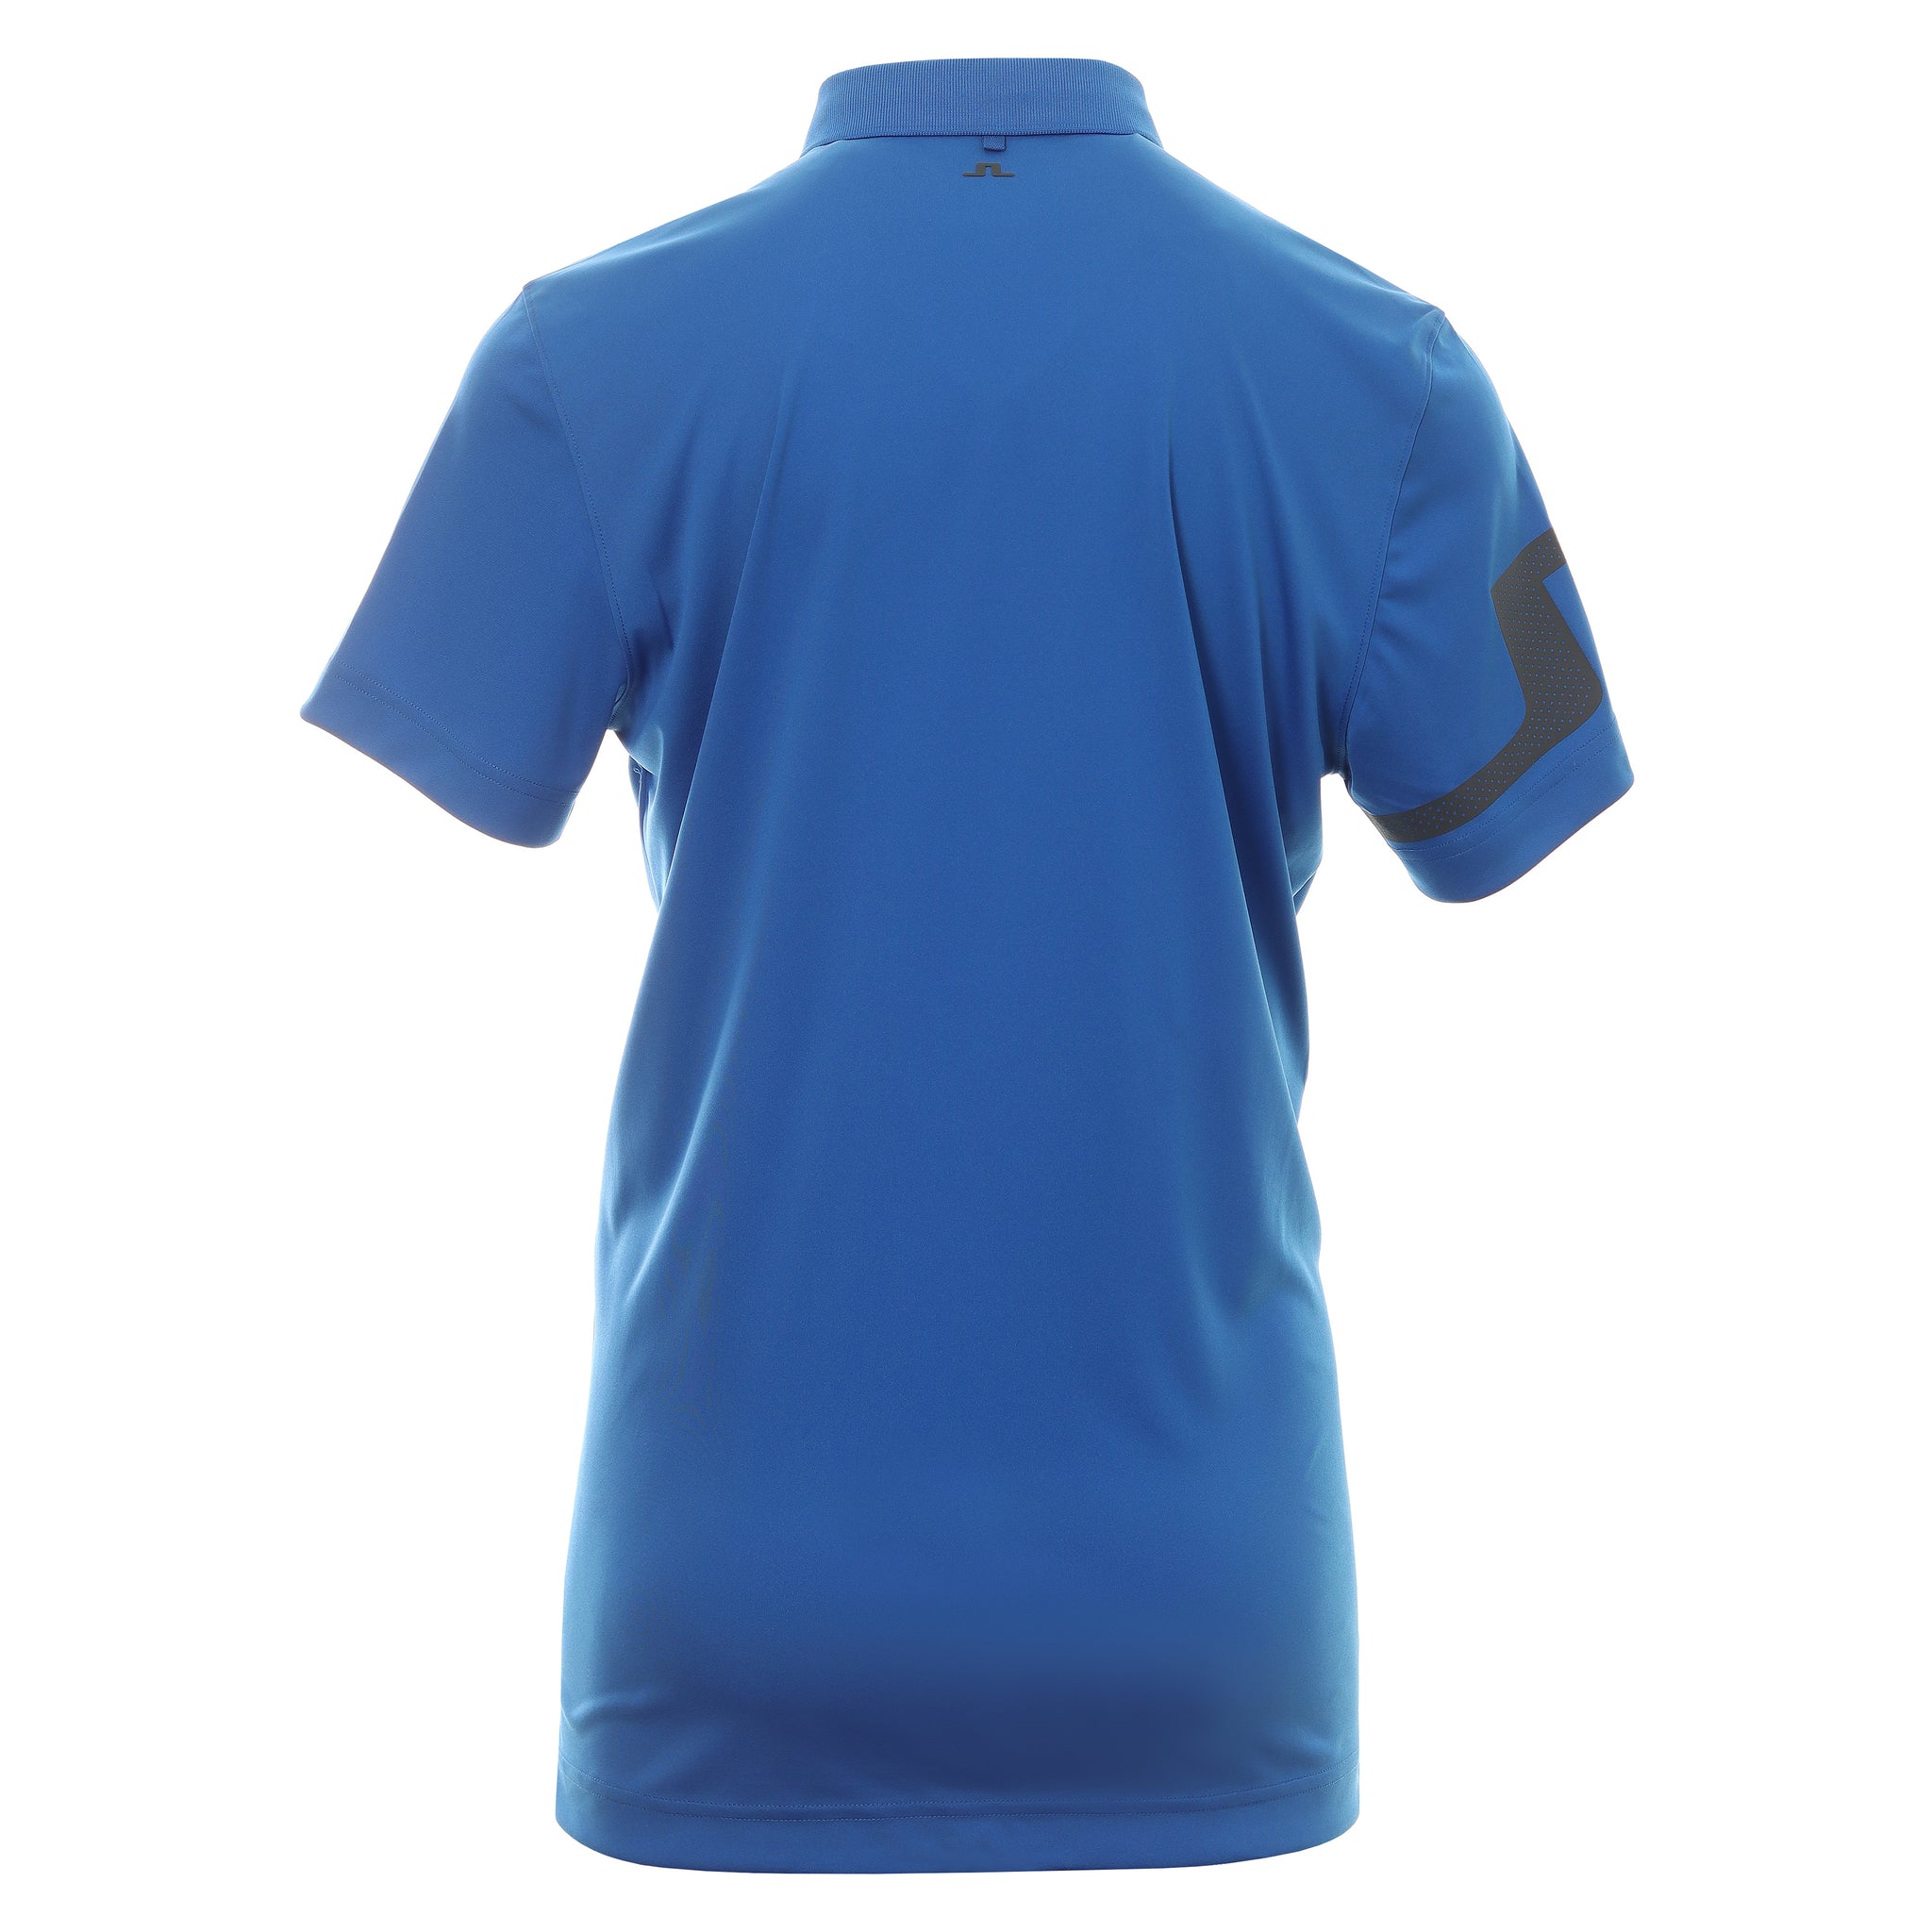 J.Lindeberg Golf Heath Polo Shirt